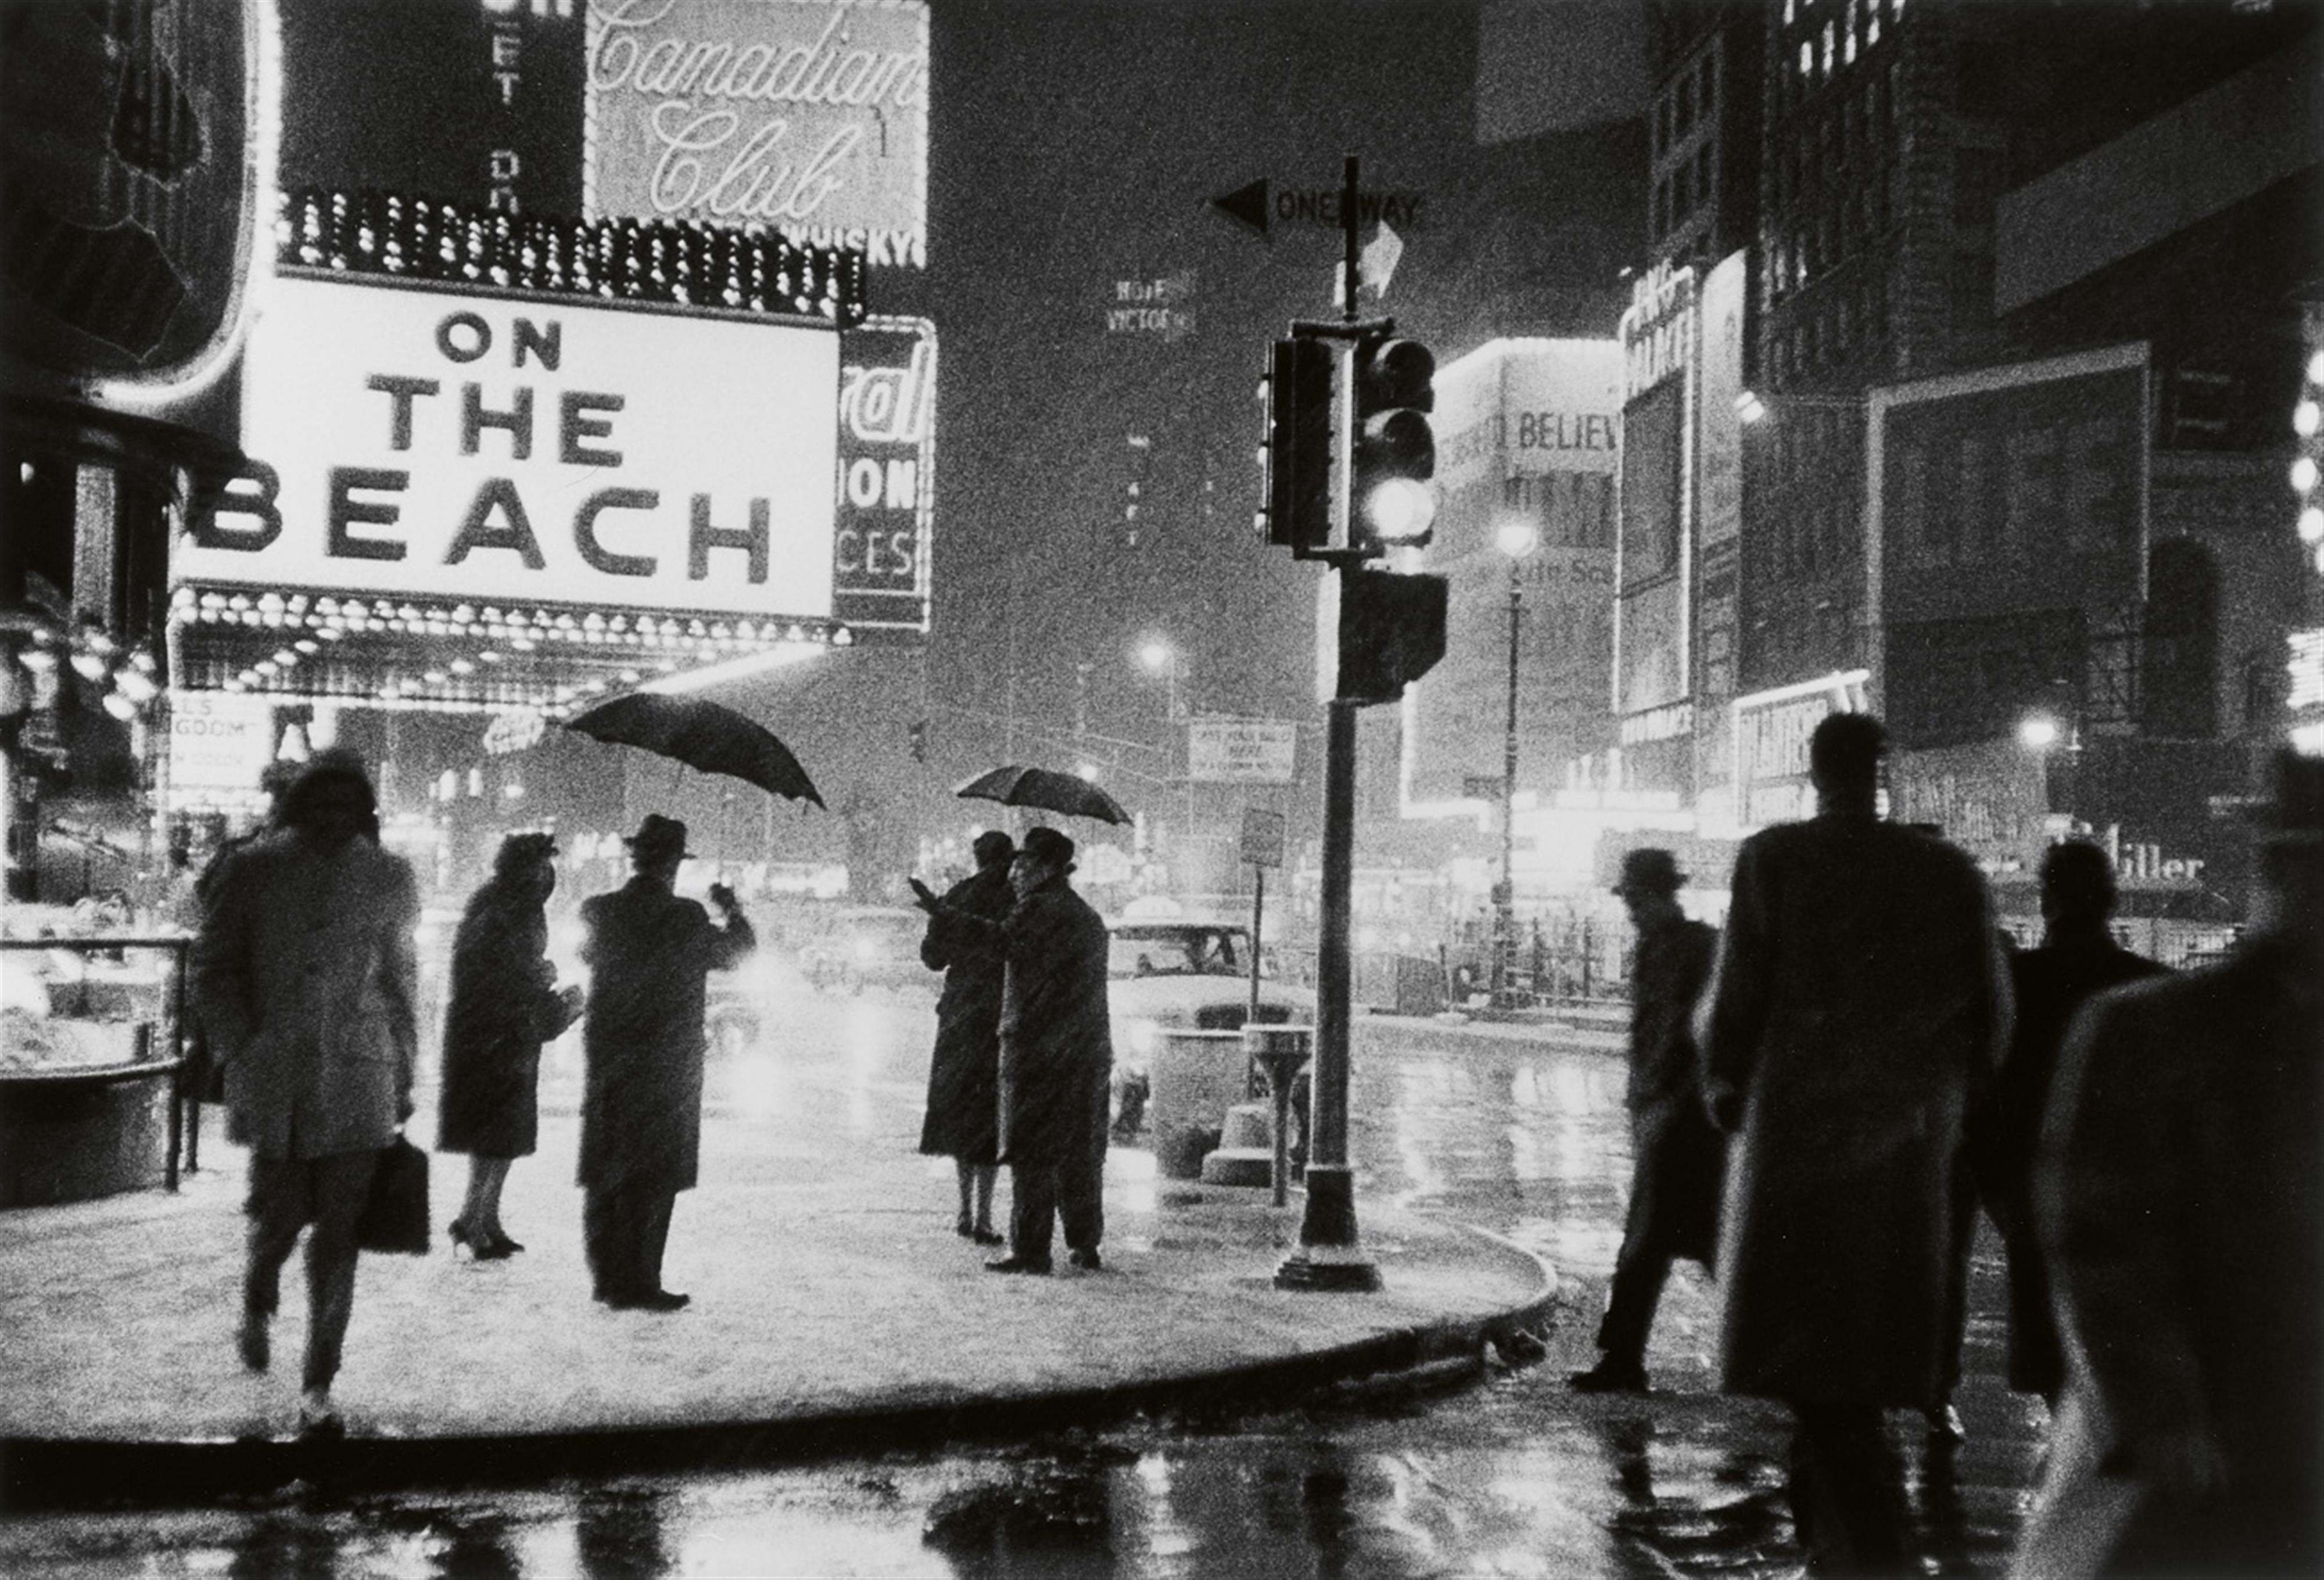 Bedrich Grunzweig - 'On the beach', Times Square, New York City - image-1